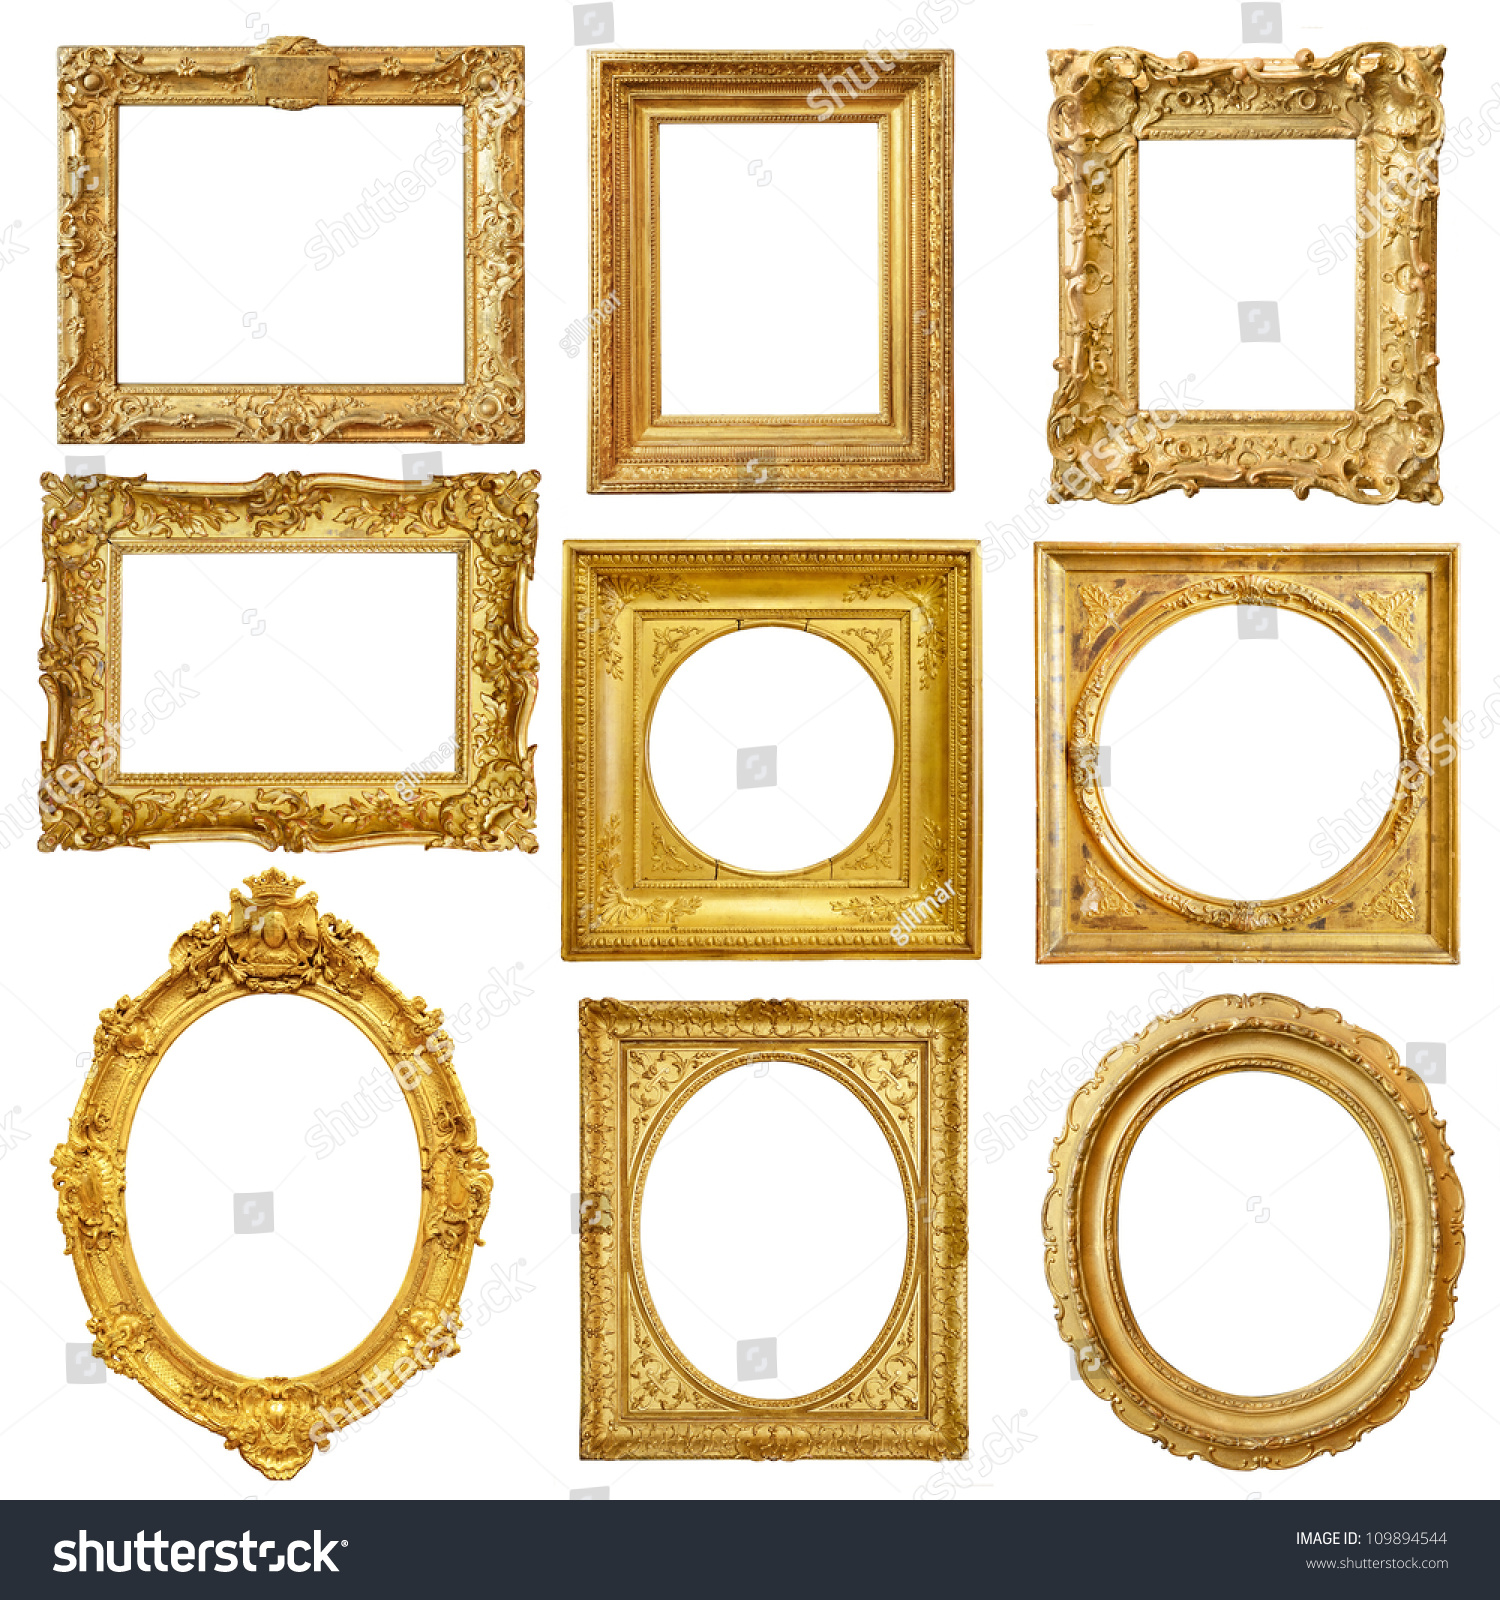 Set of golden vintage frame isolated on white background #109894544